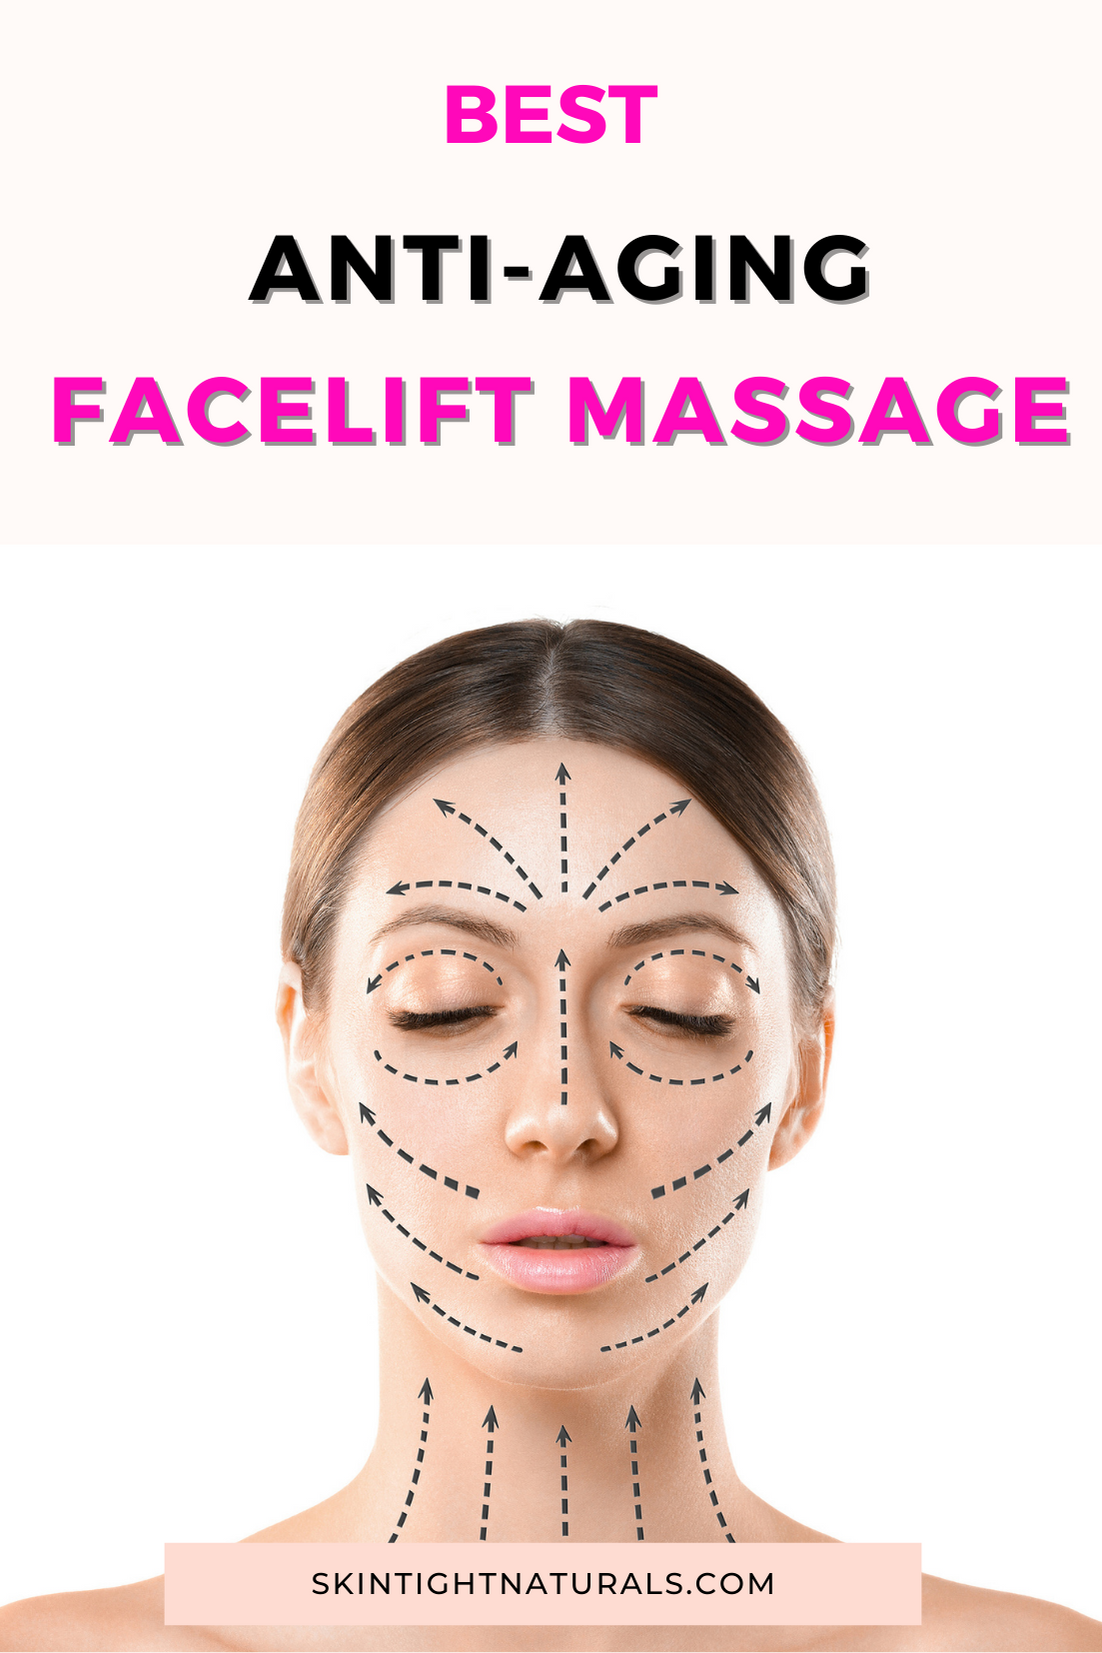 Anti Aging Facelift Massage Skin Tight Naturals 